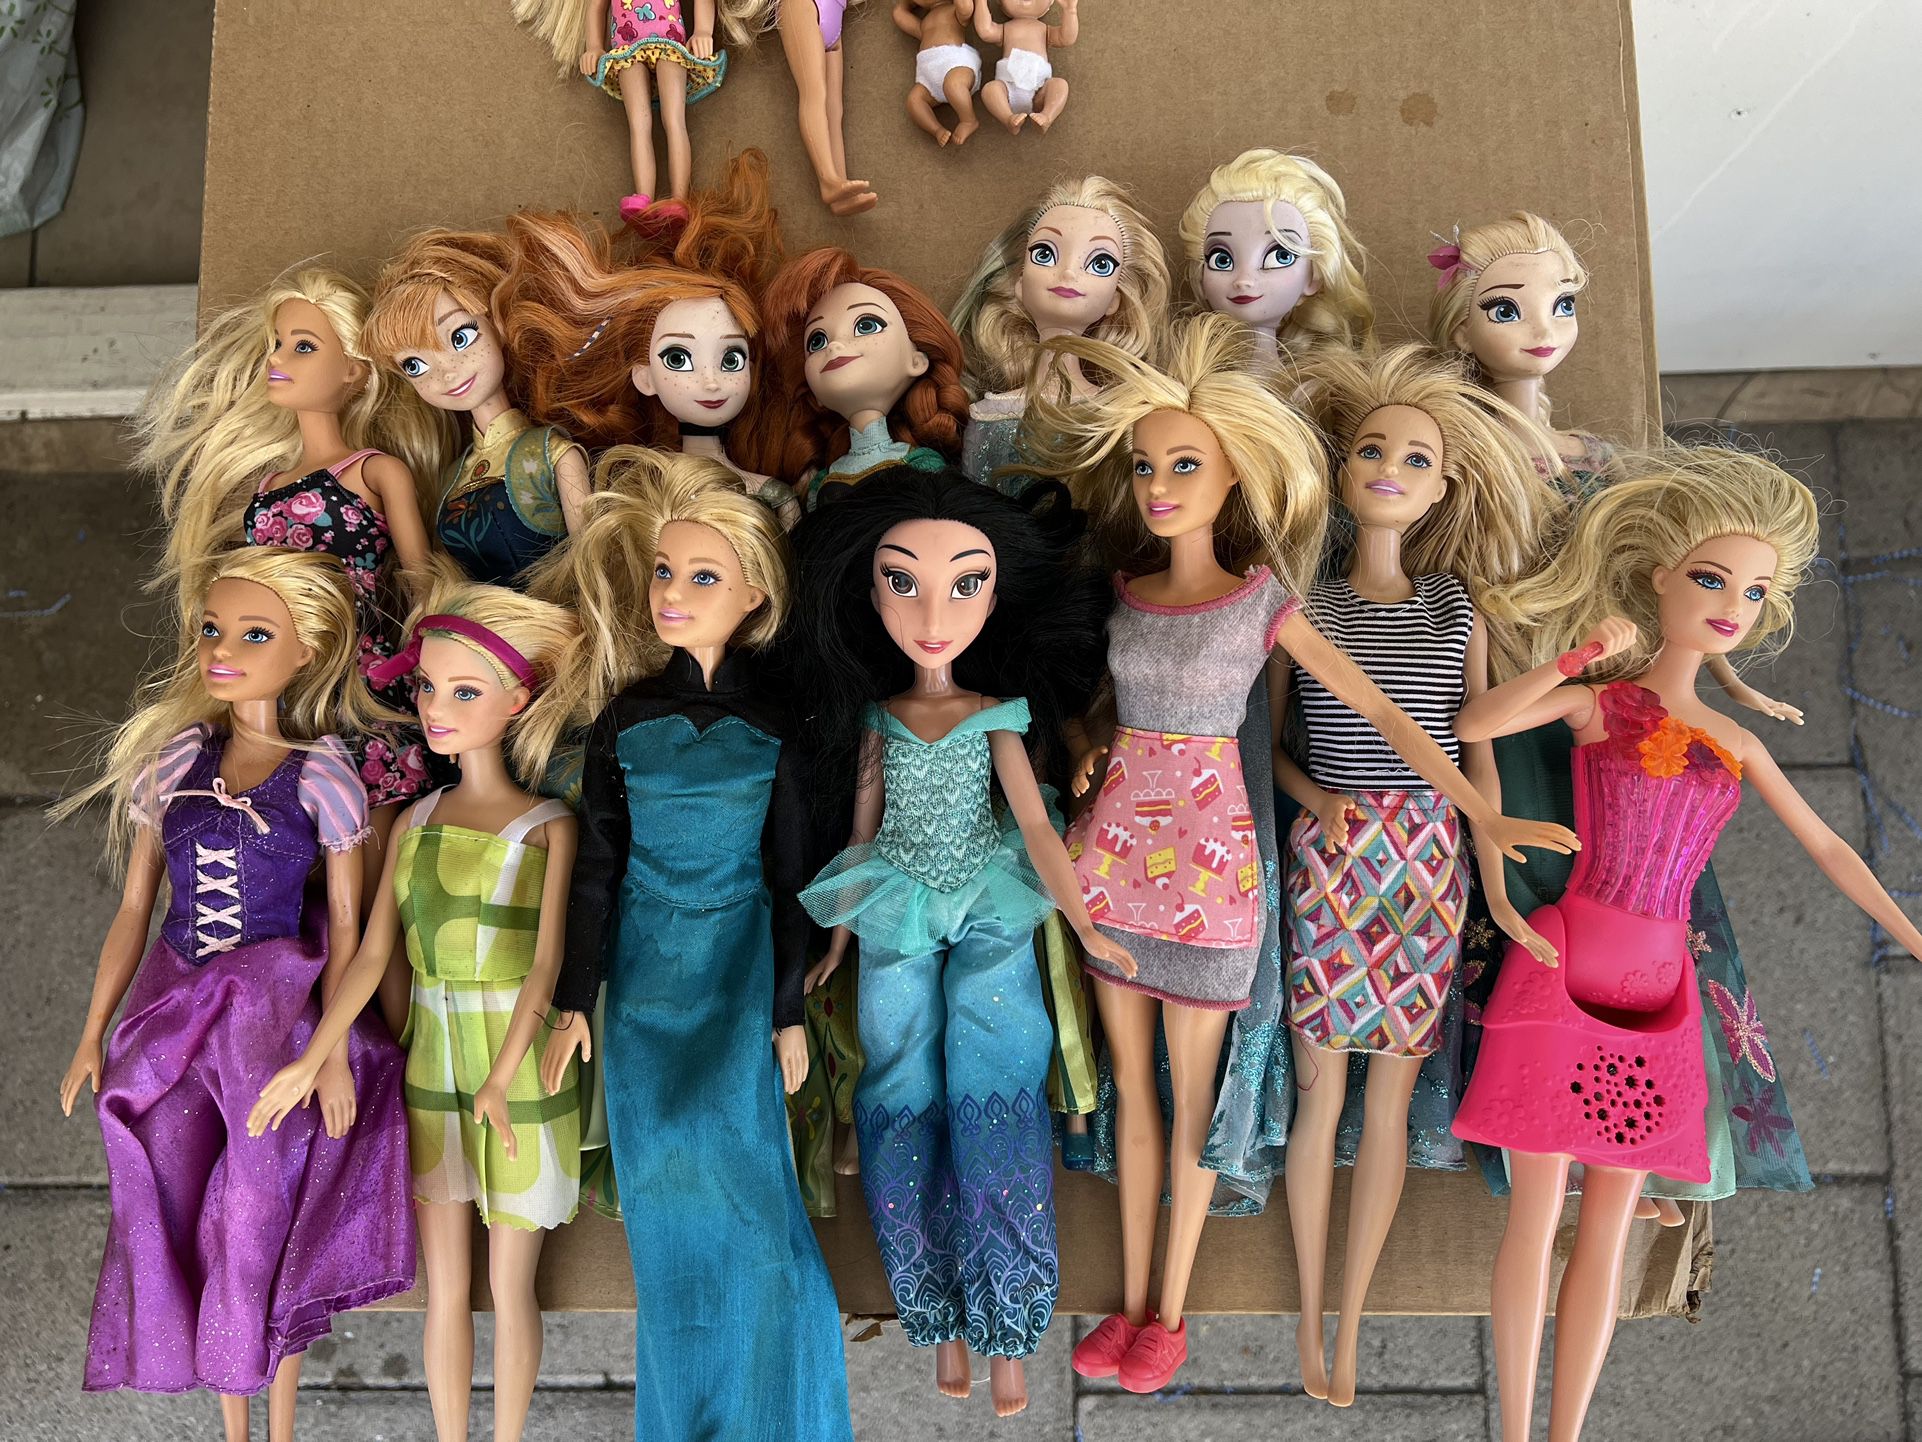 Disney Plush Princesses for Sale in Anaheim, CA - OfferUp